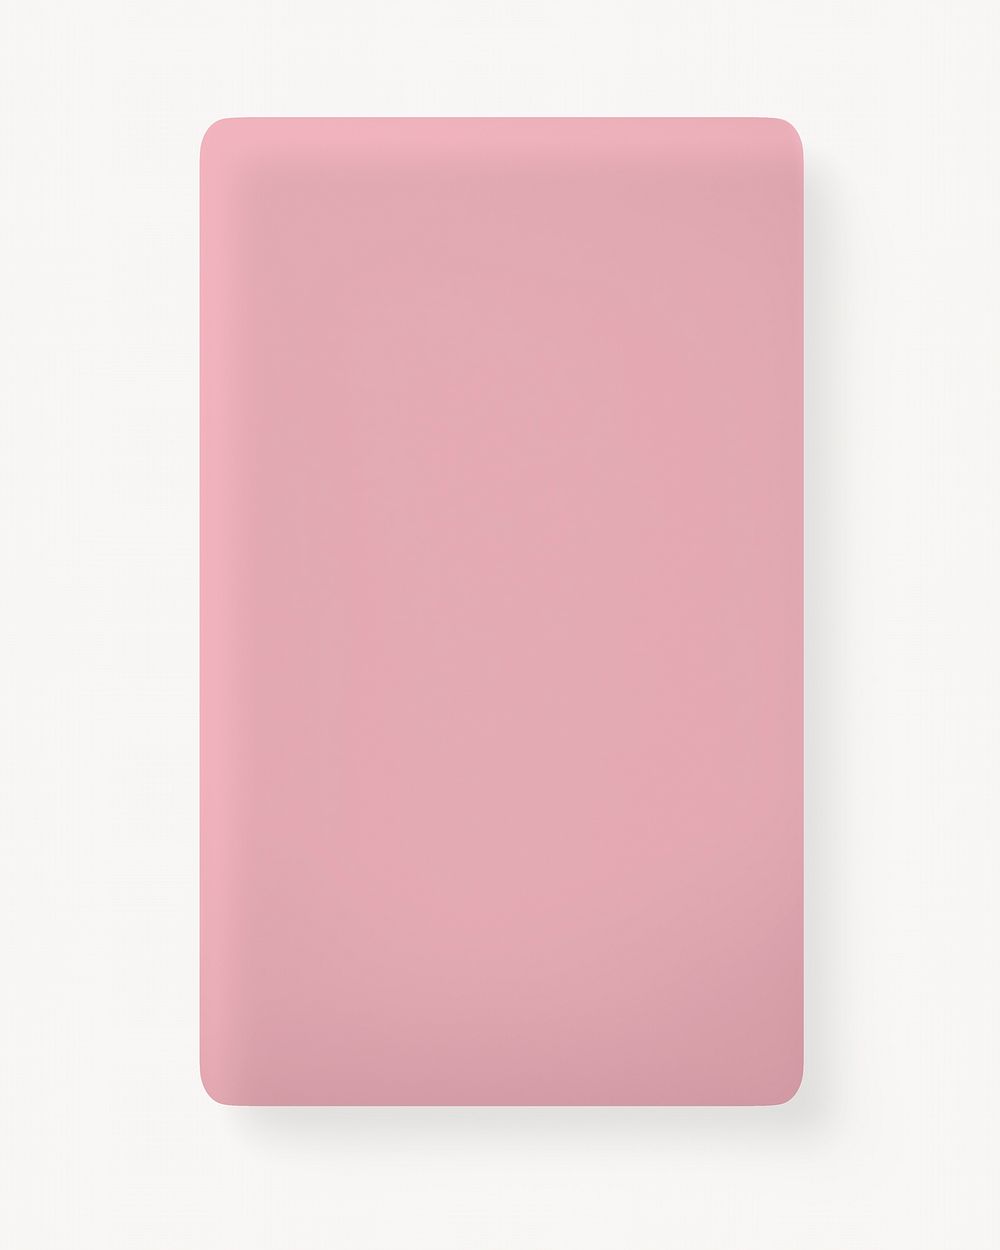 Business card, pink 3D rendering design